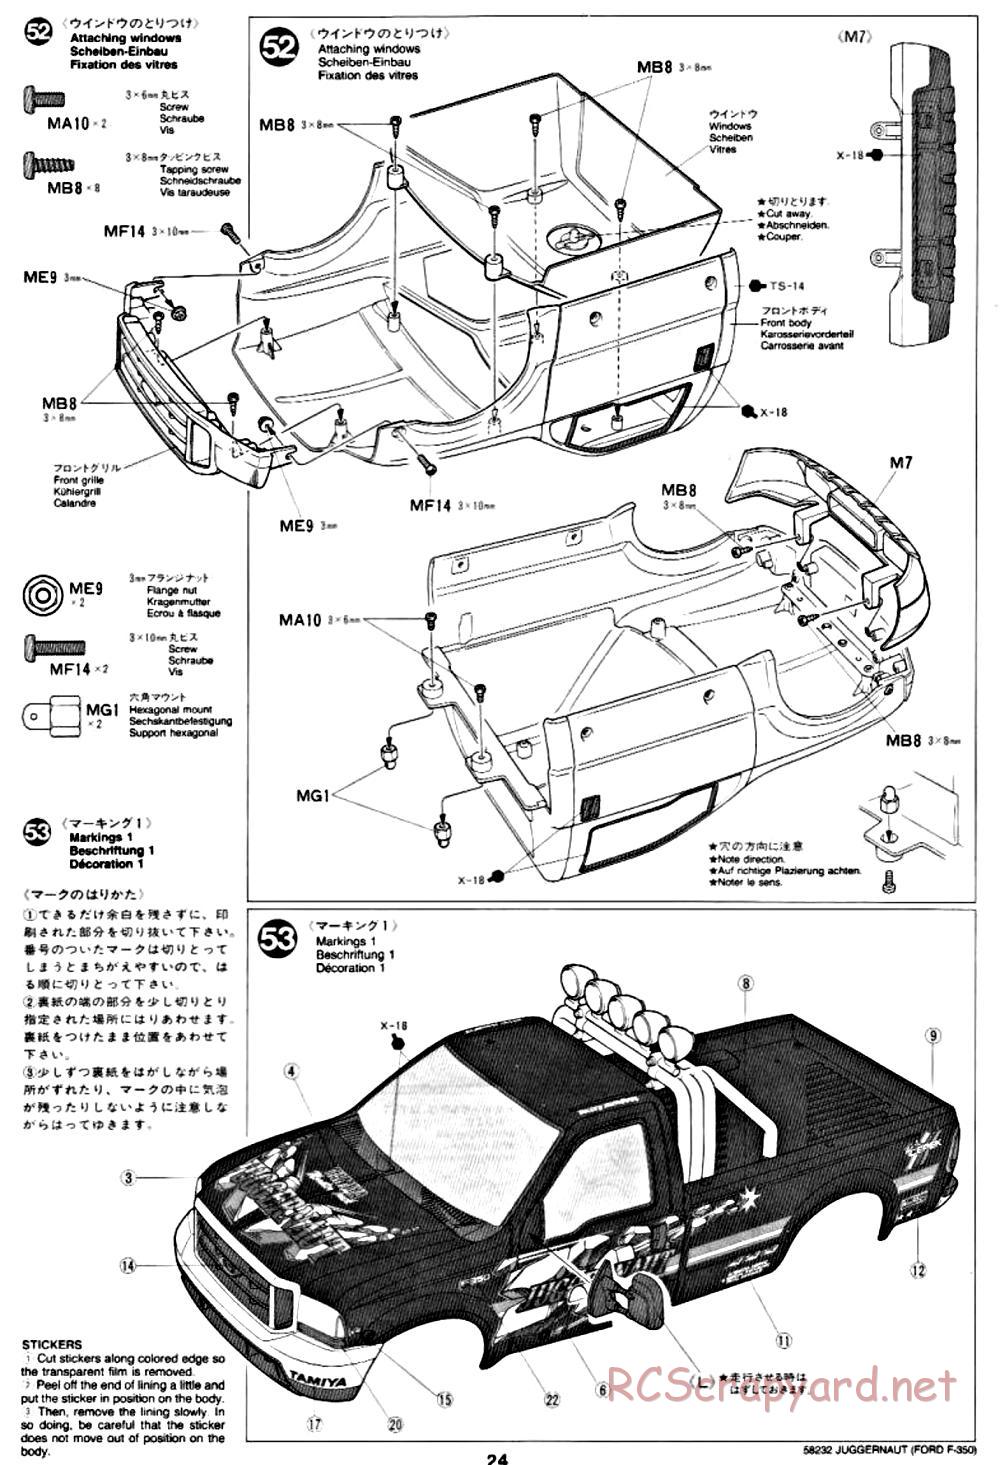 Tamiya - Juggernaut Chassis - Manual - Page 24